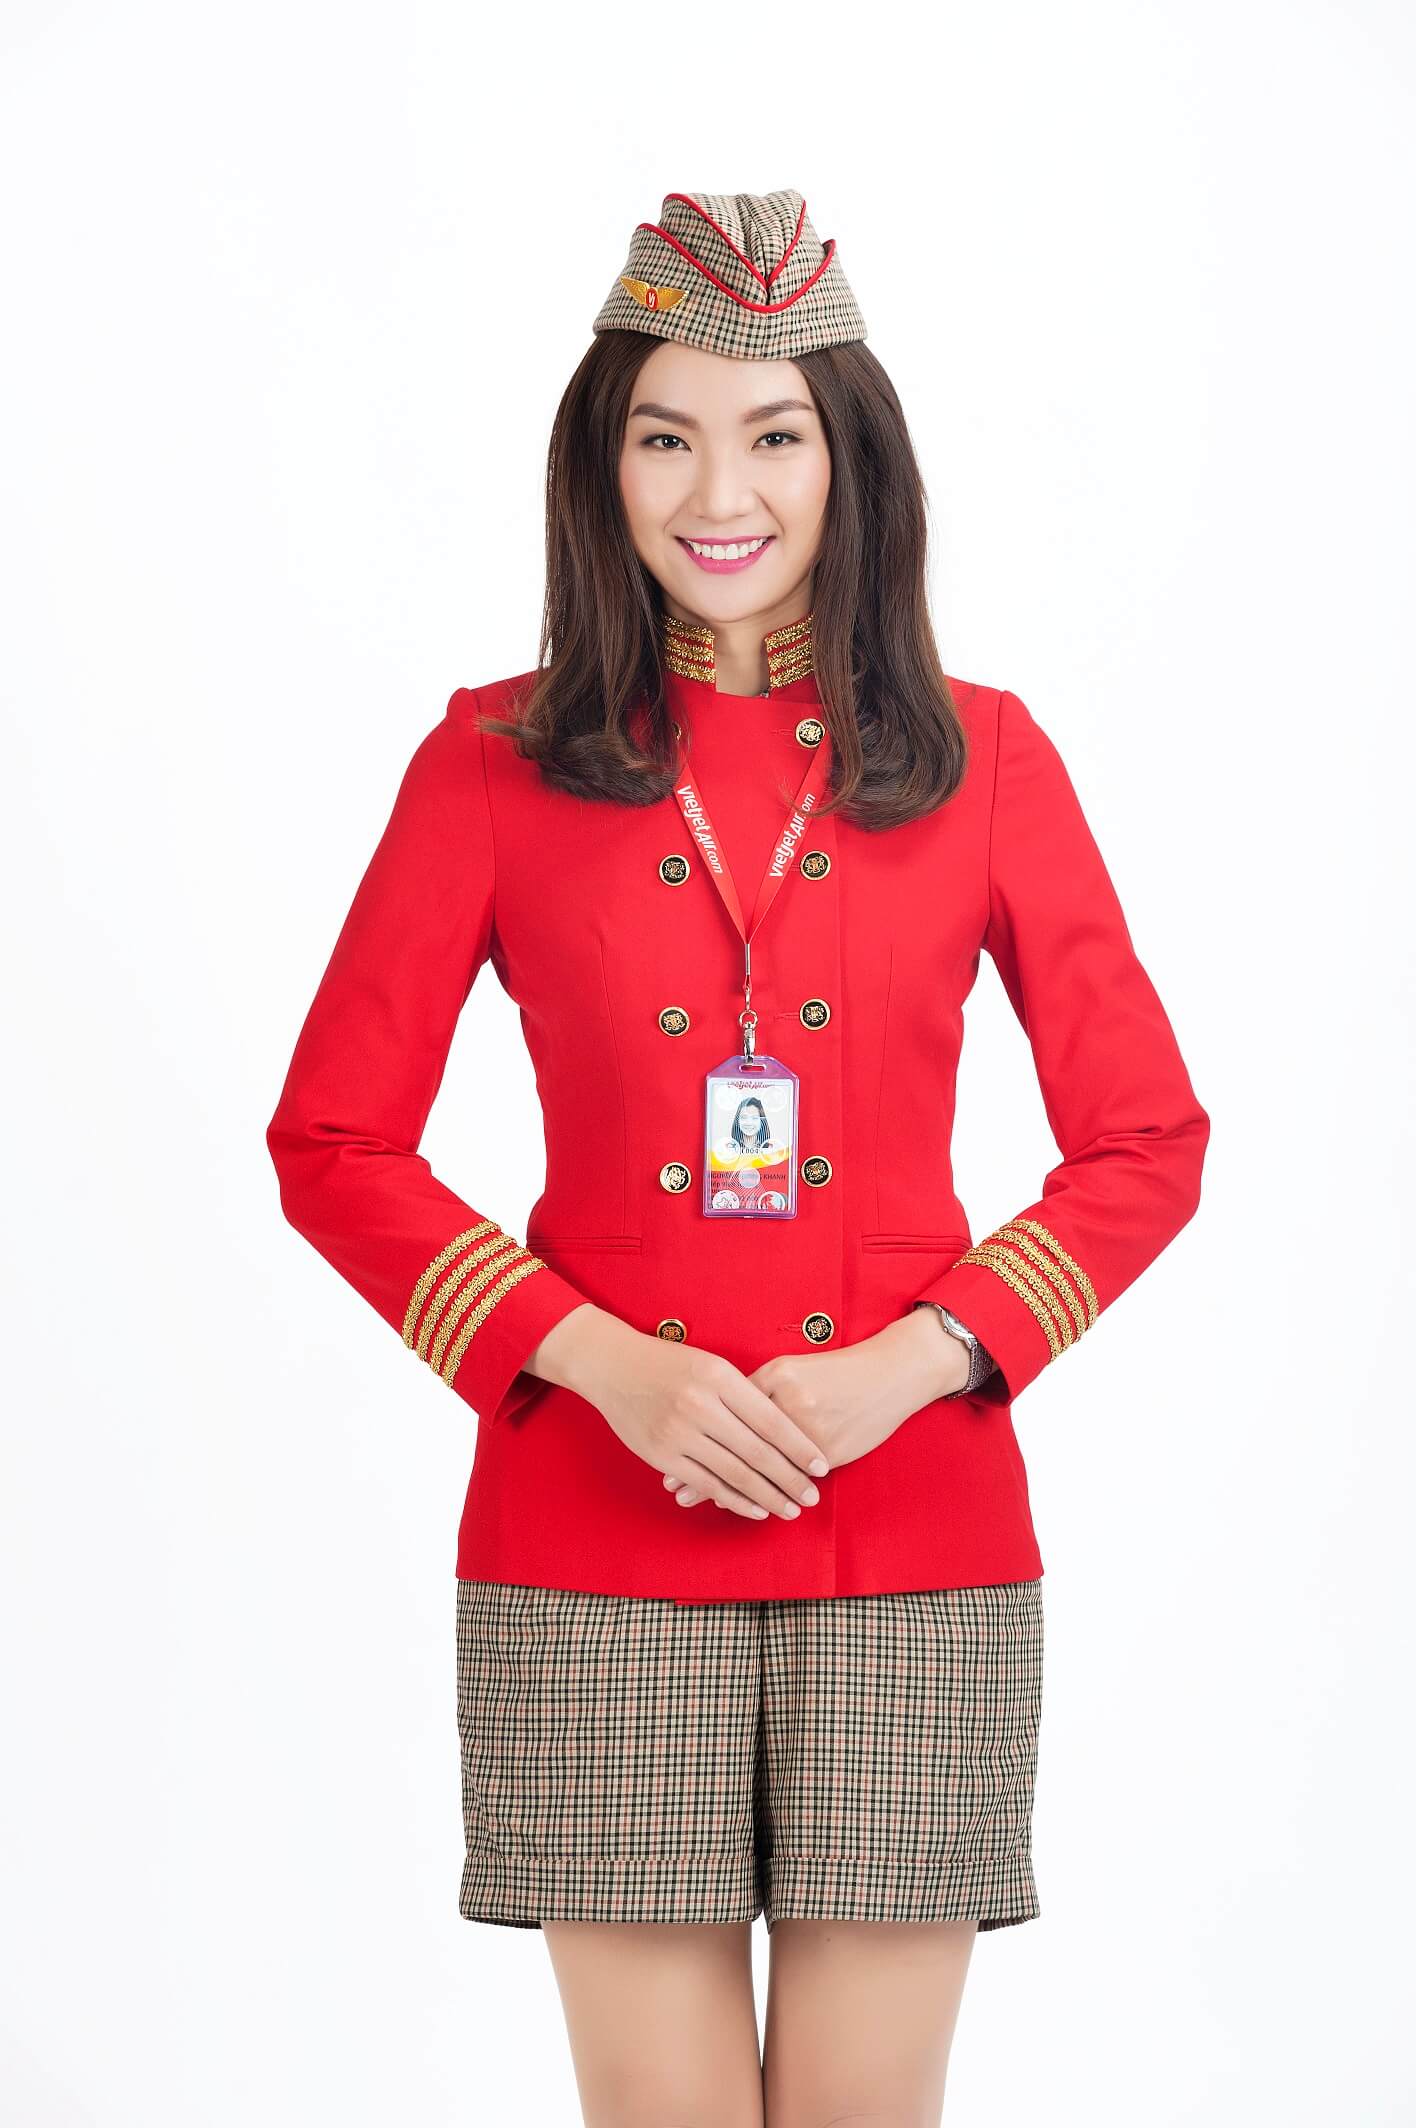 Flight attendants dress jacket and red felt-cloth coat